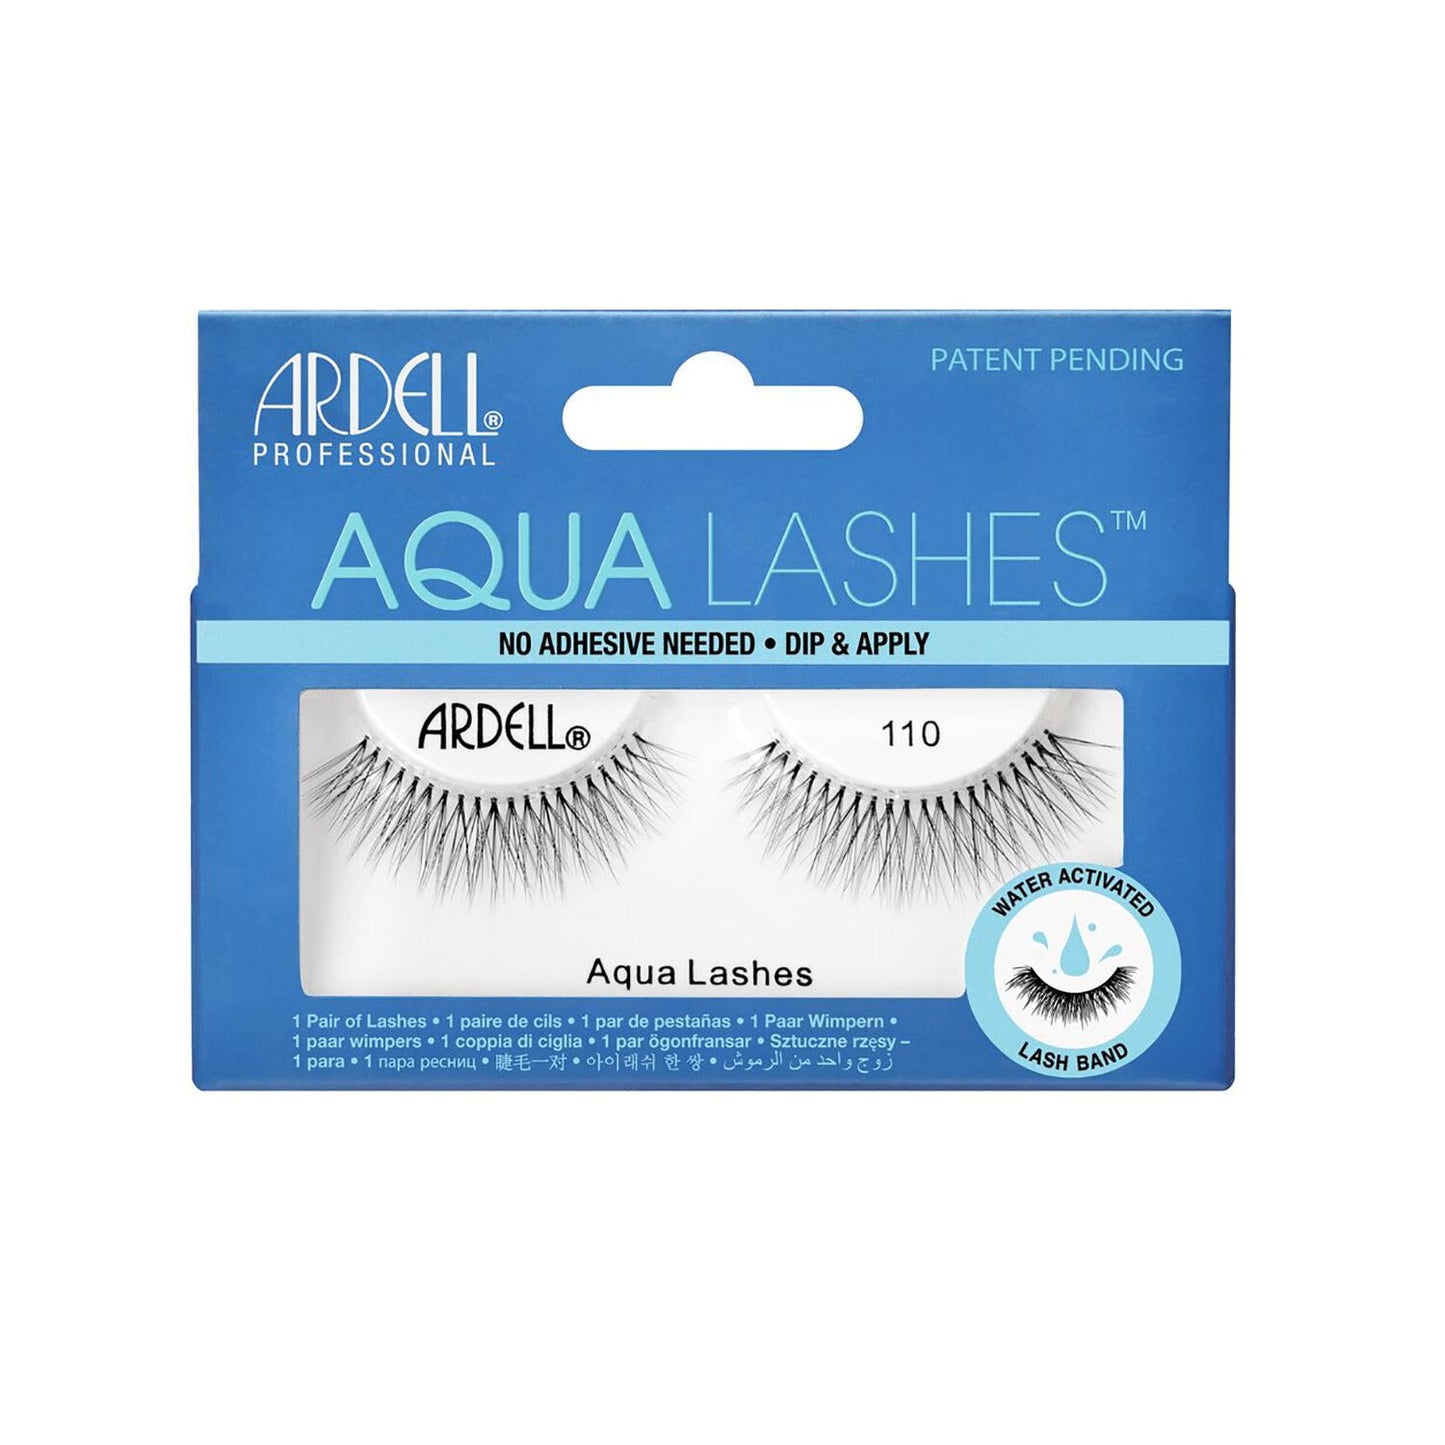 Aqua Lashes  by   Ardell Aqua Lashes #110